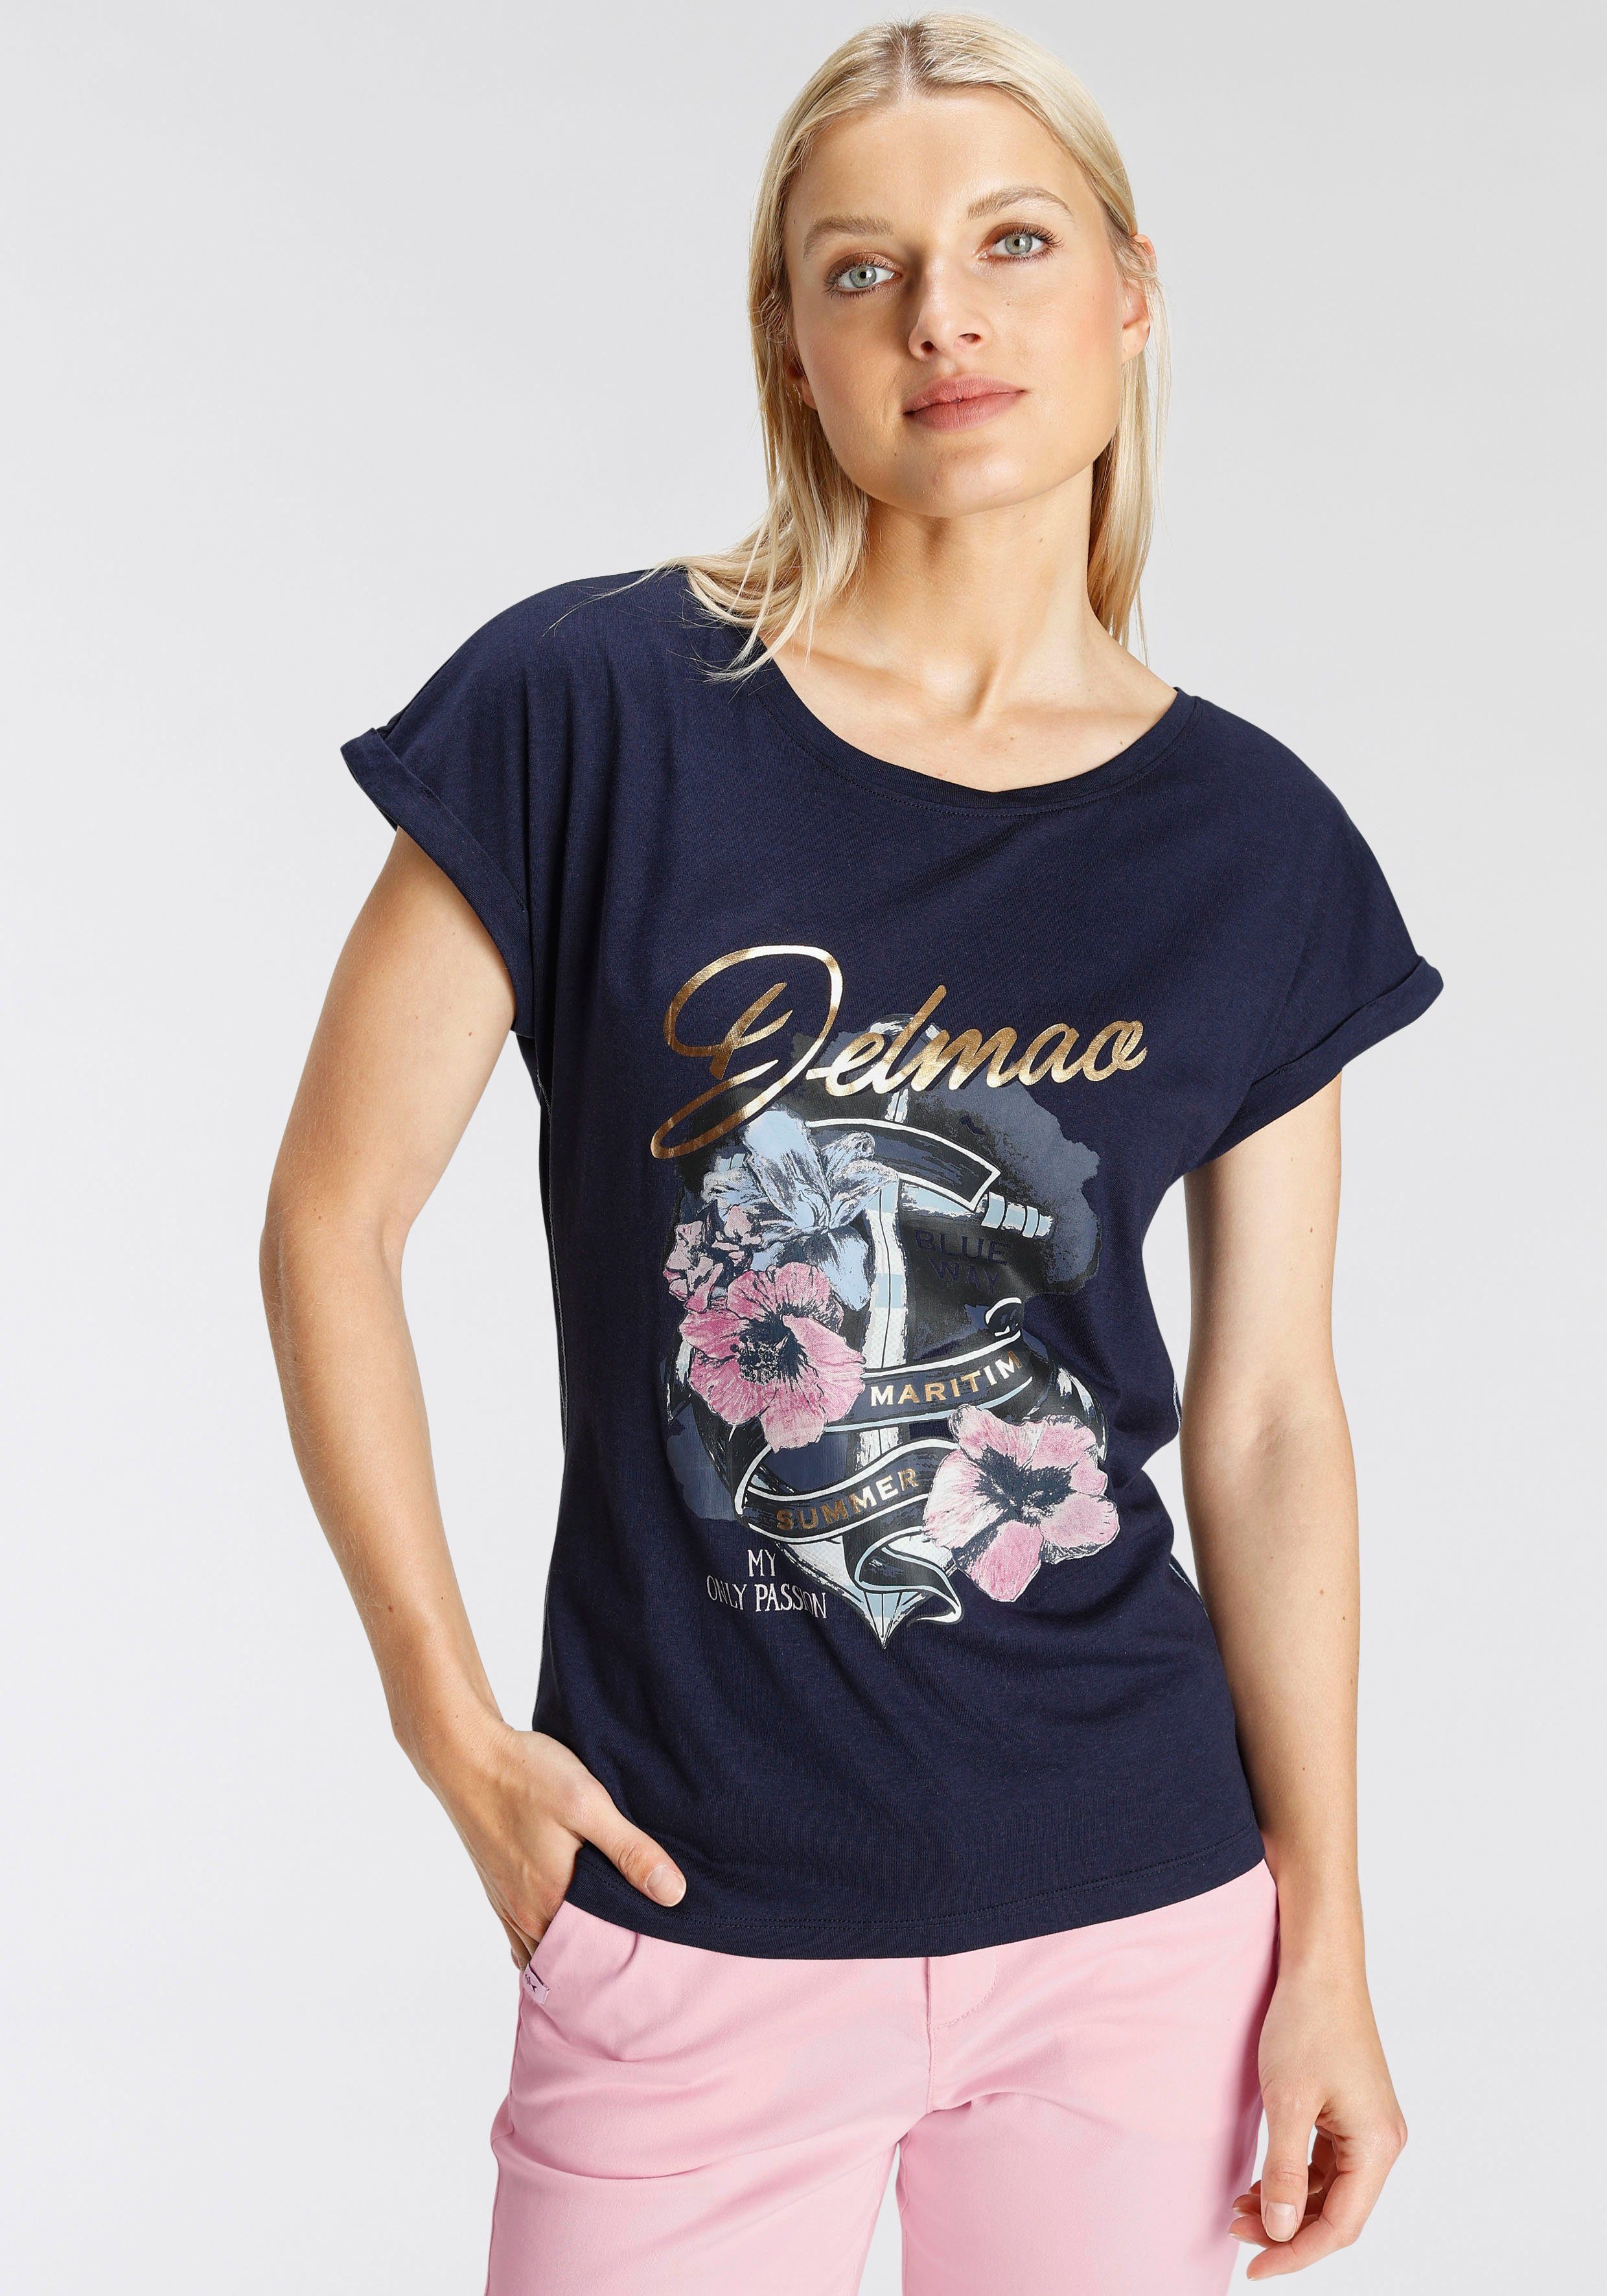 DELMAO Print-Shirt mit geblümten Anker-Logodruck - NEUE MARKE! | T-Shirts